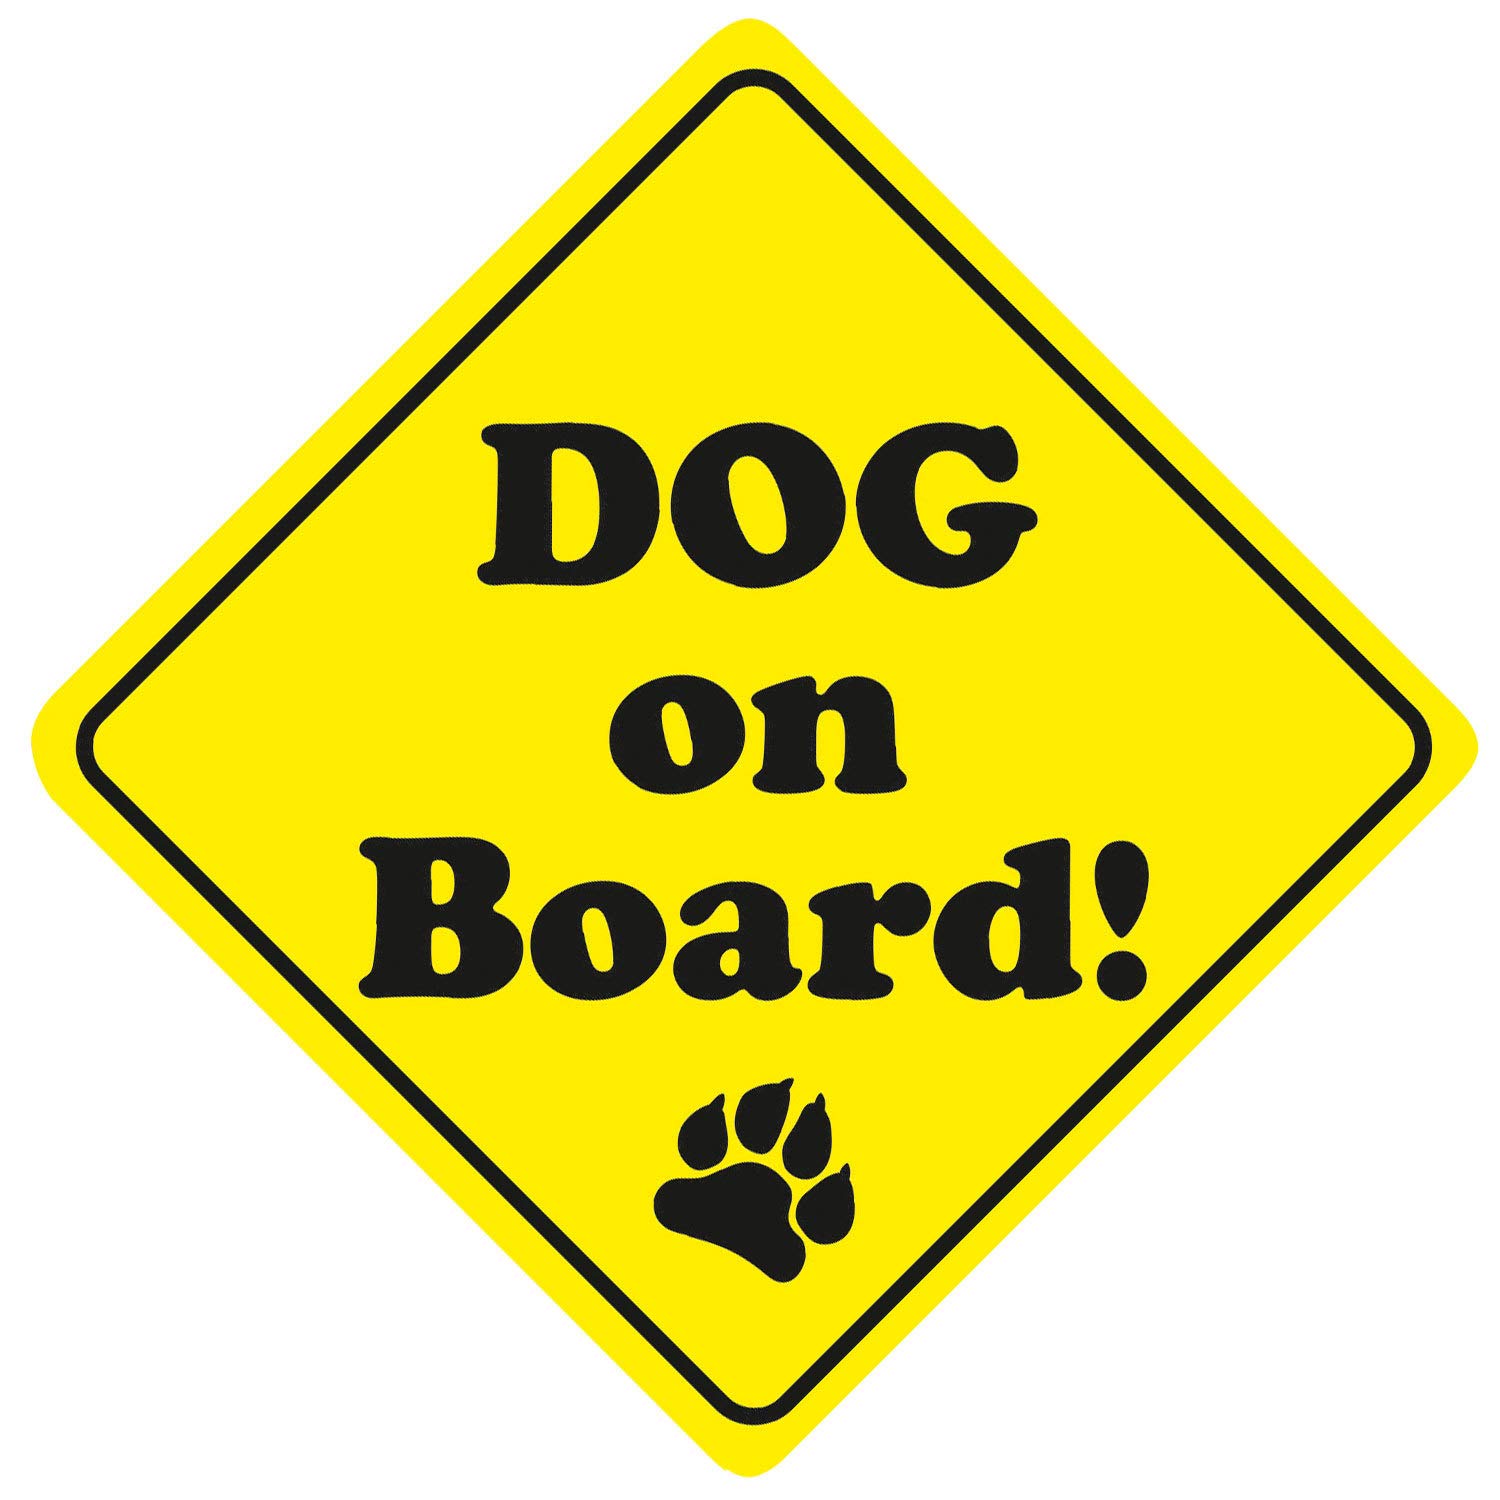 iSecur Auto-Aufkleber Dog on Board I 15 cm hoch I Hundeaufkleber I Sticker für Hunde-Besitzer I wetterfest I kfz_318 von iSecur